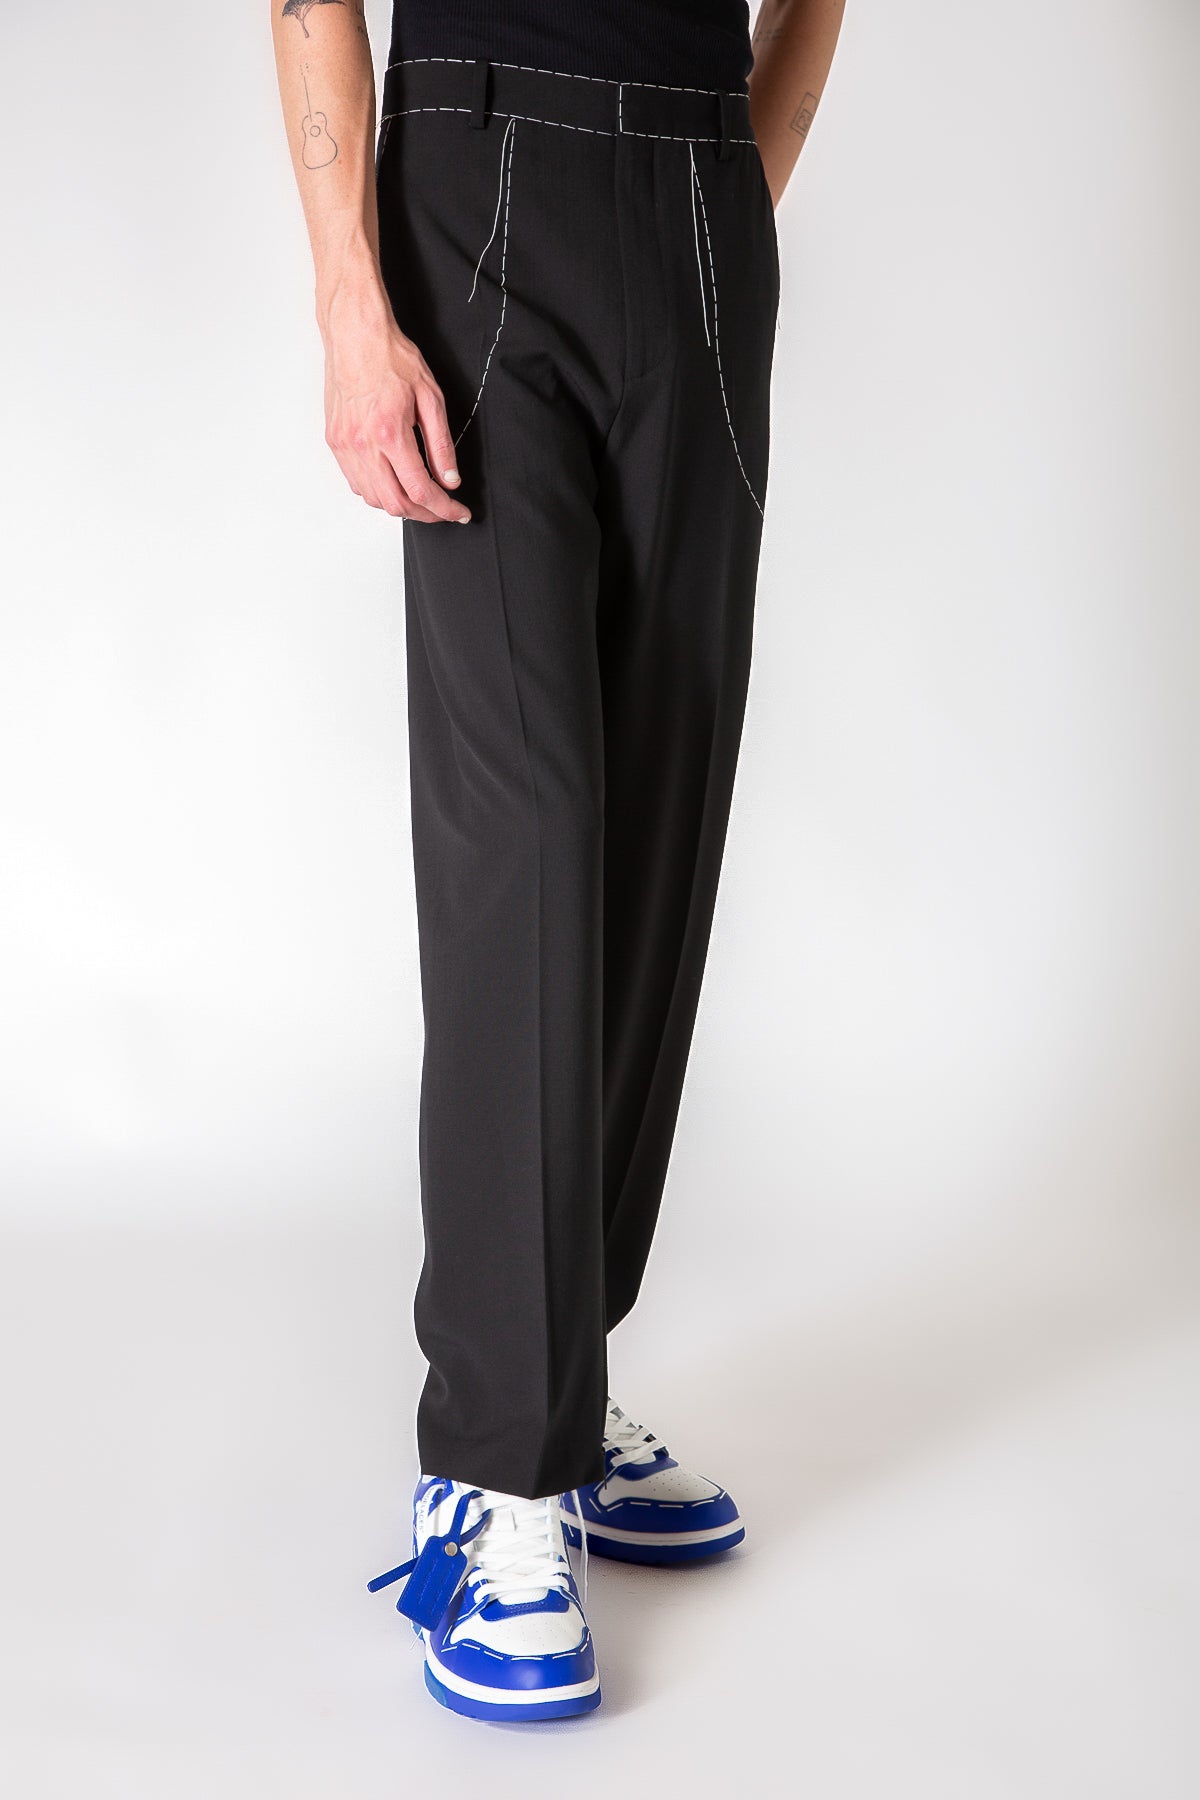 Doncaster Womens Silk High-Rise Side-Zip Straight Leg Pants Trousers G -  Shop Linda's Stuff